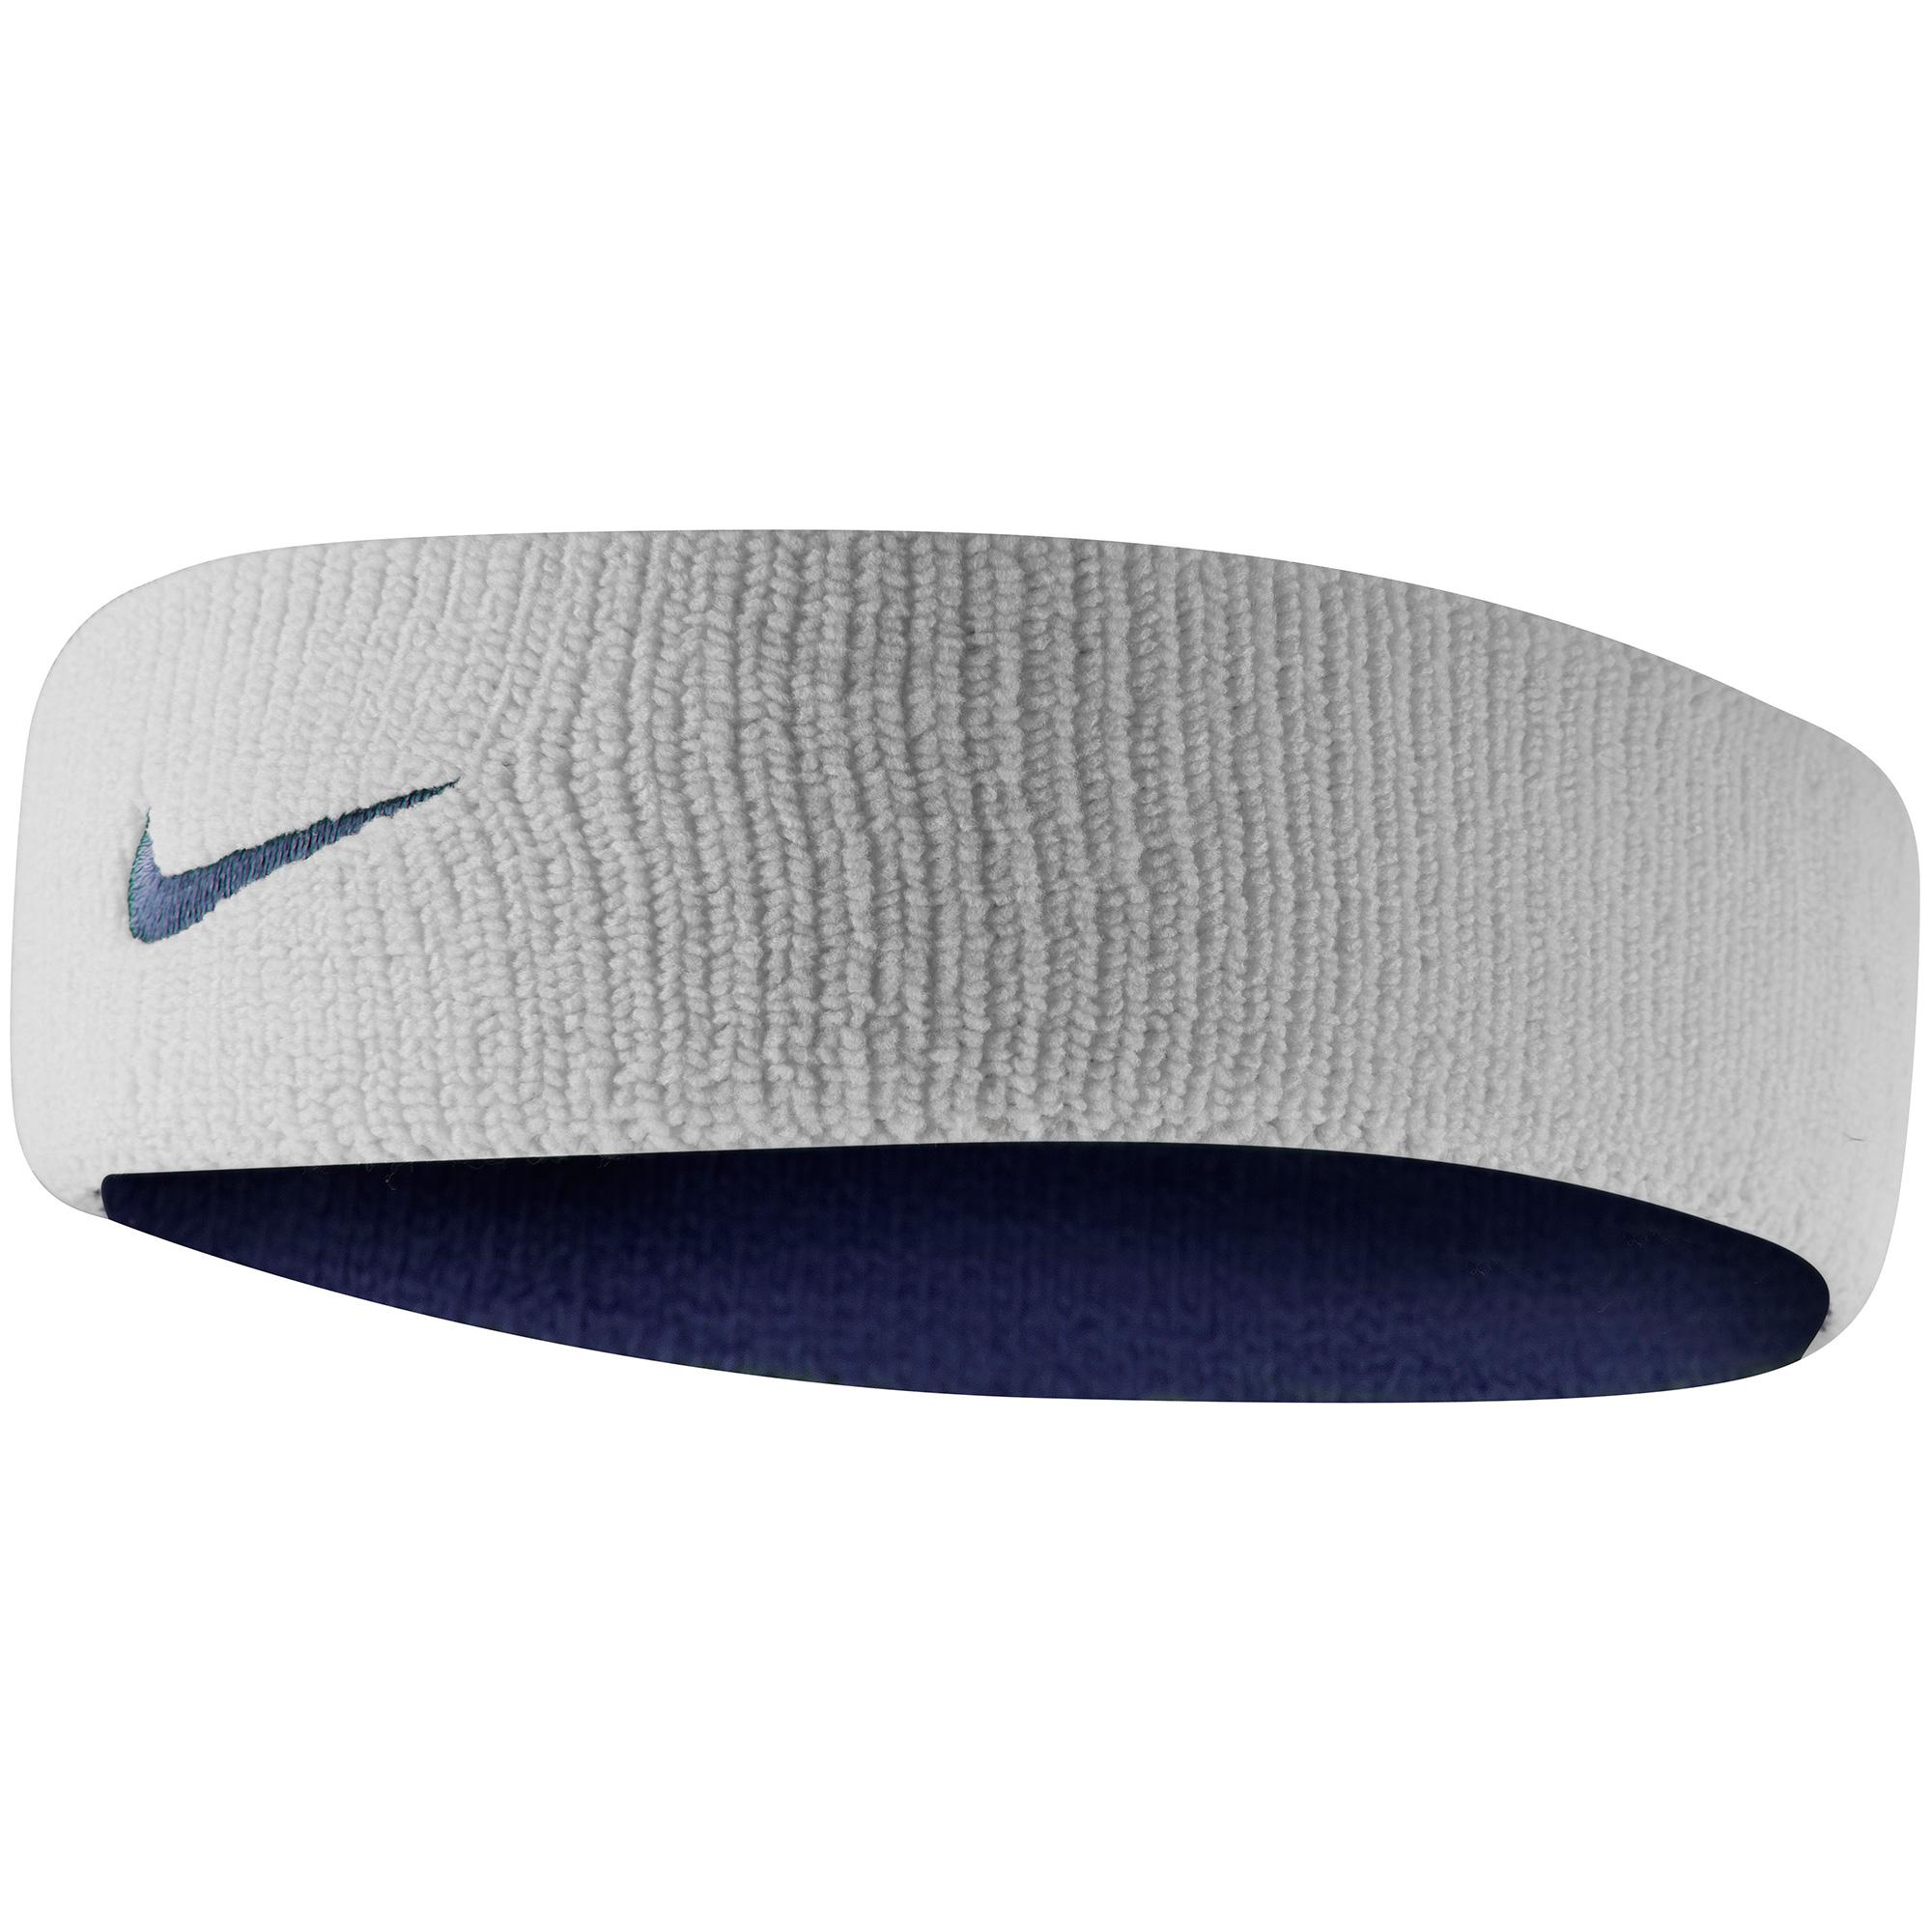 Nike Dri-FIT Home and Away Headband - Blue/White - Tennisnuts.com